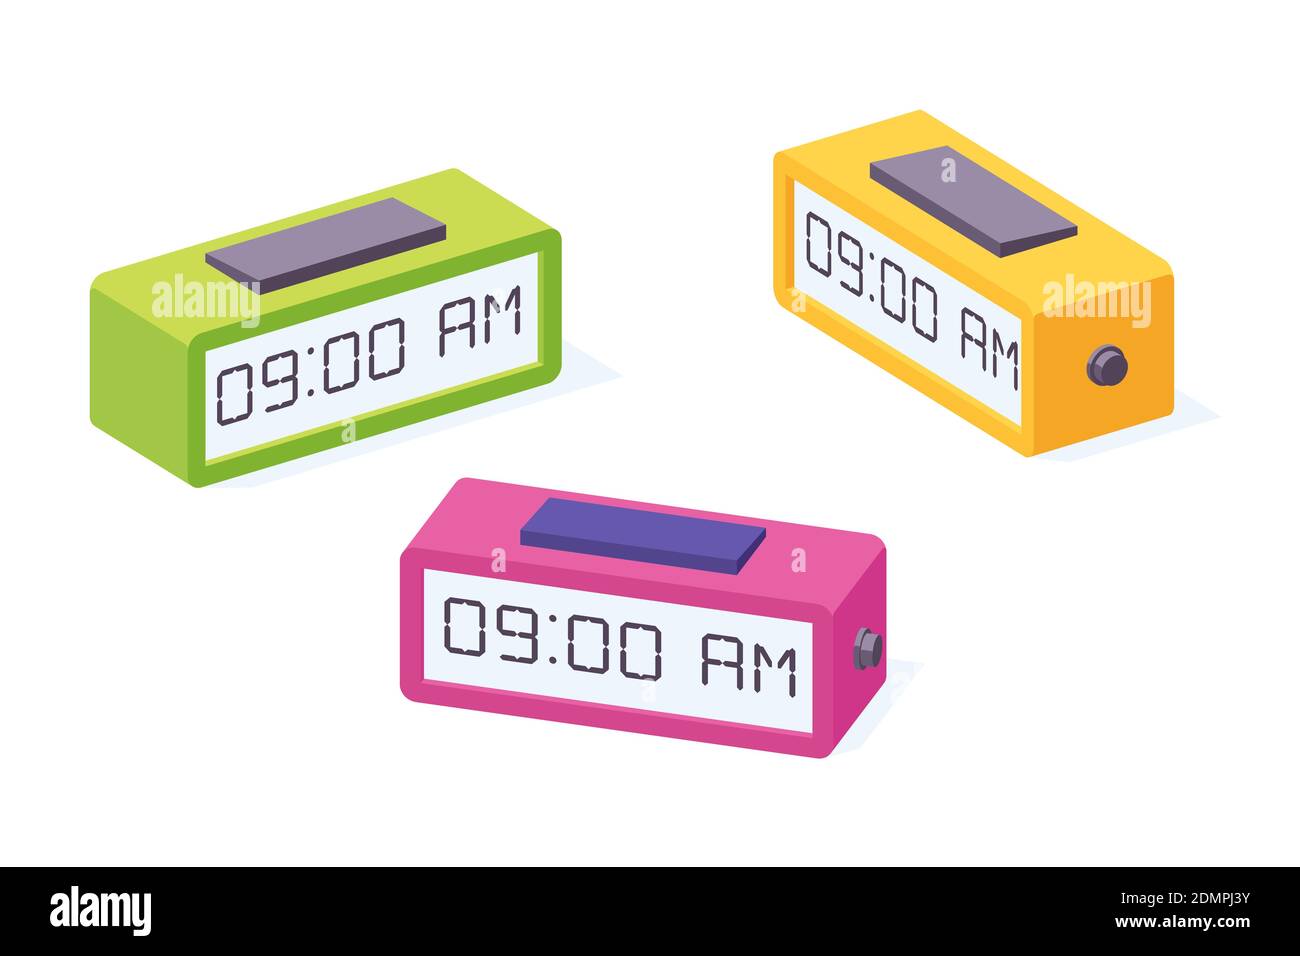 Digital desk clock isometric. Vector illustration of electronic alarm bedside or business watch. Stock Vector